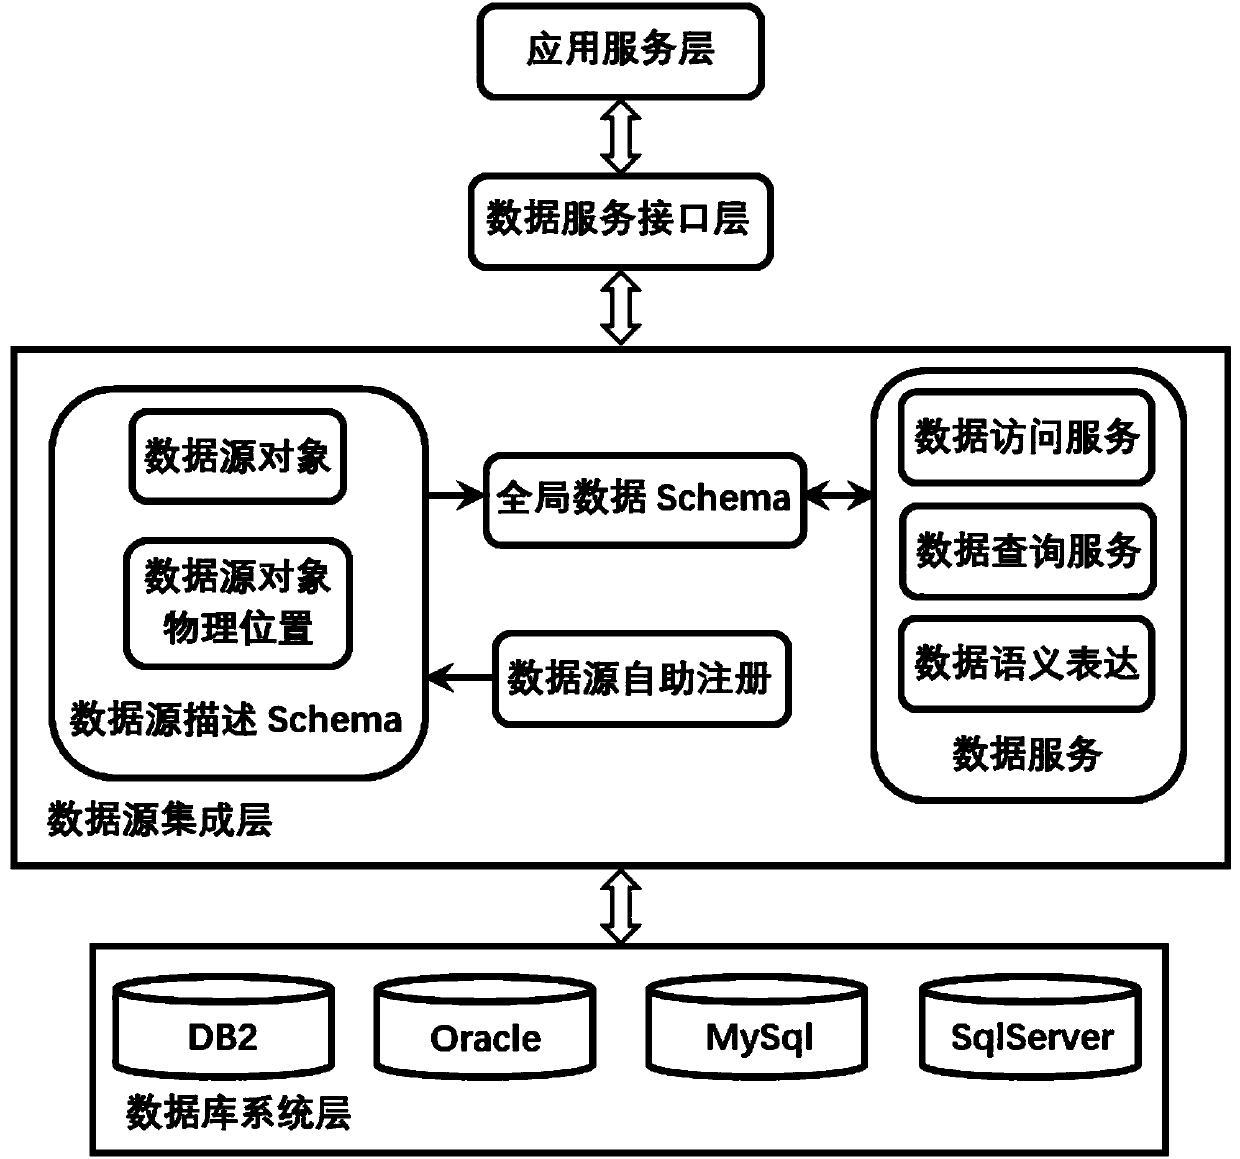 XML-based multi-source heterogeneous data integration system